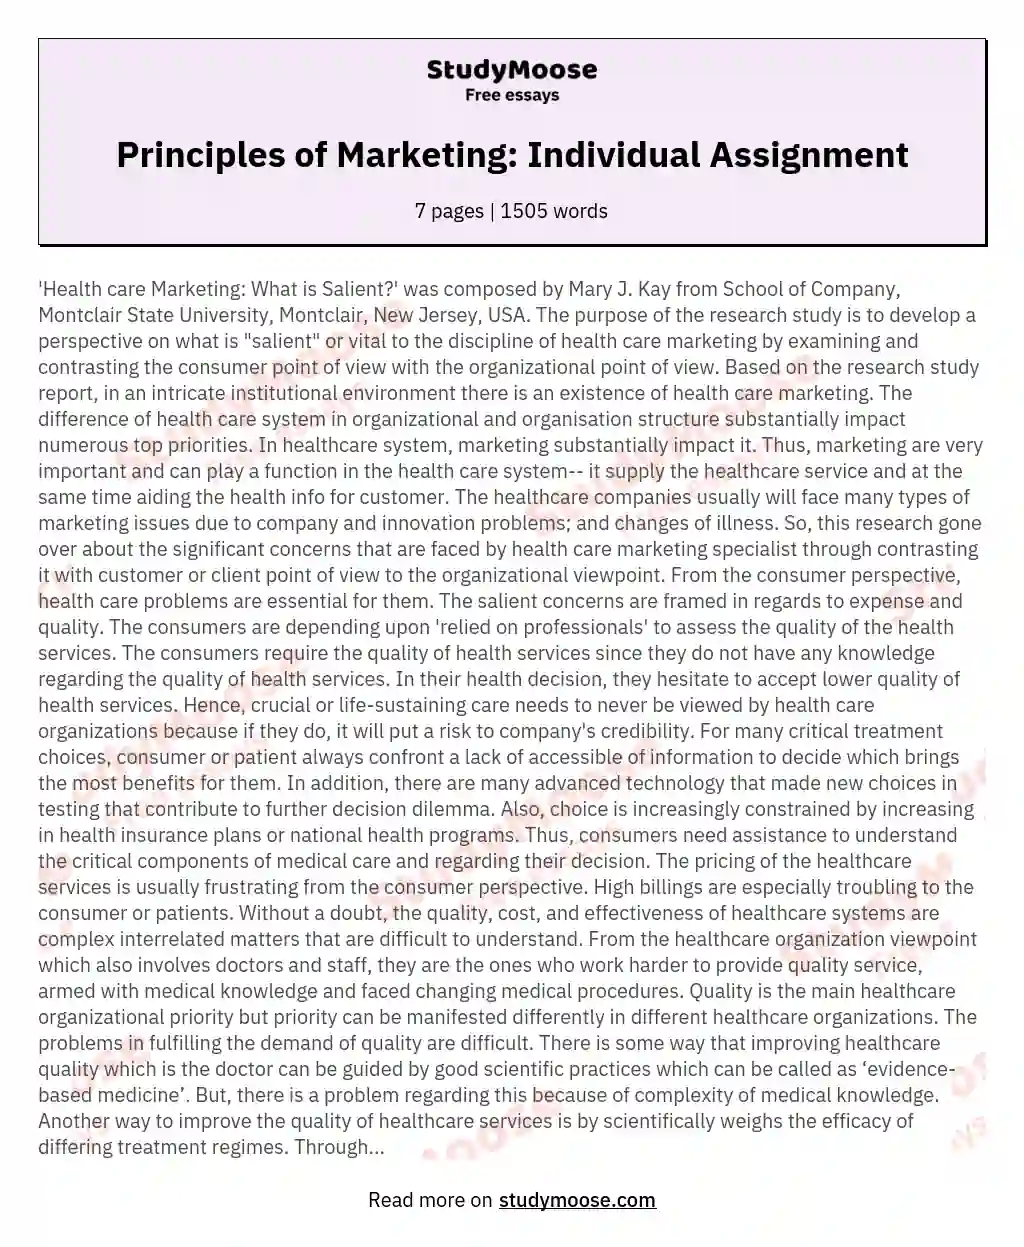 Principles of Marketing: Individual Assignment essay